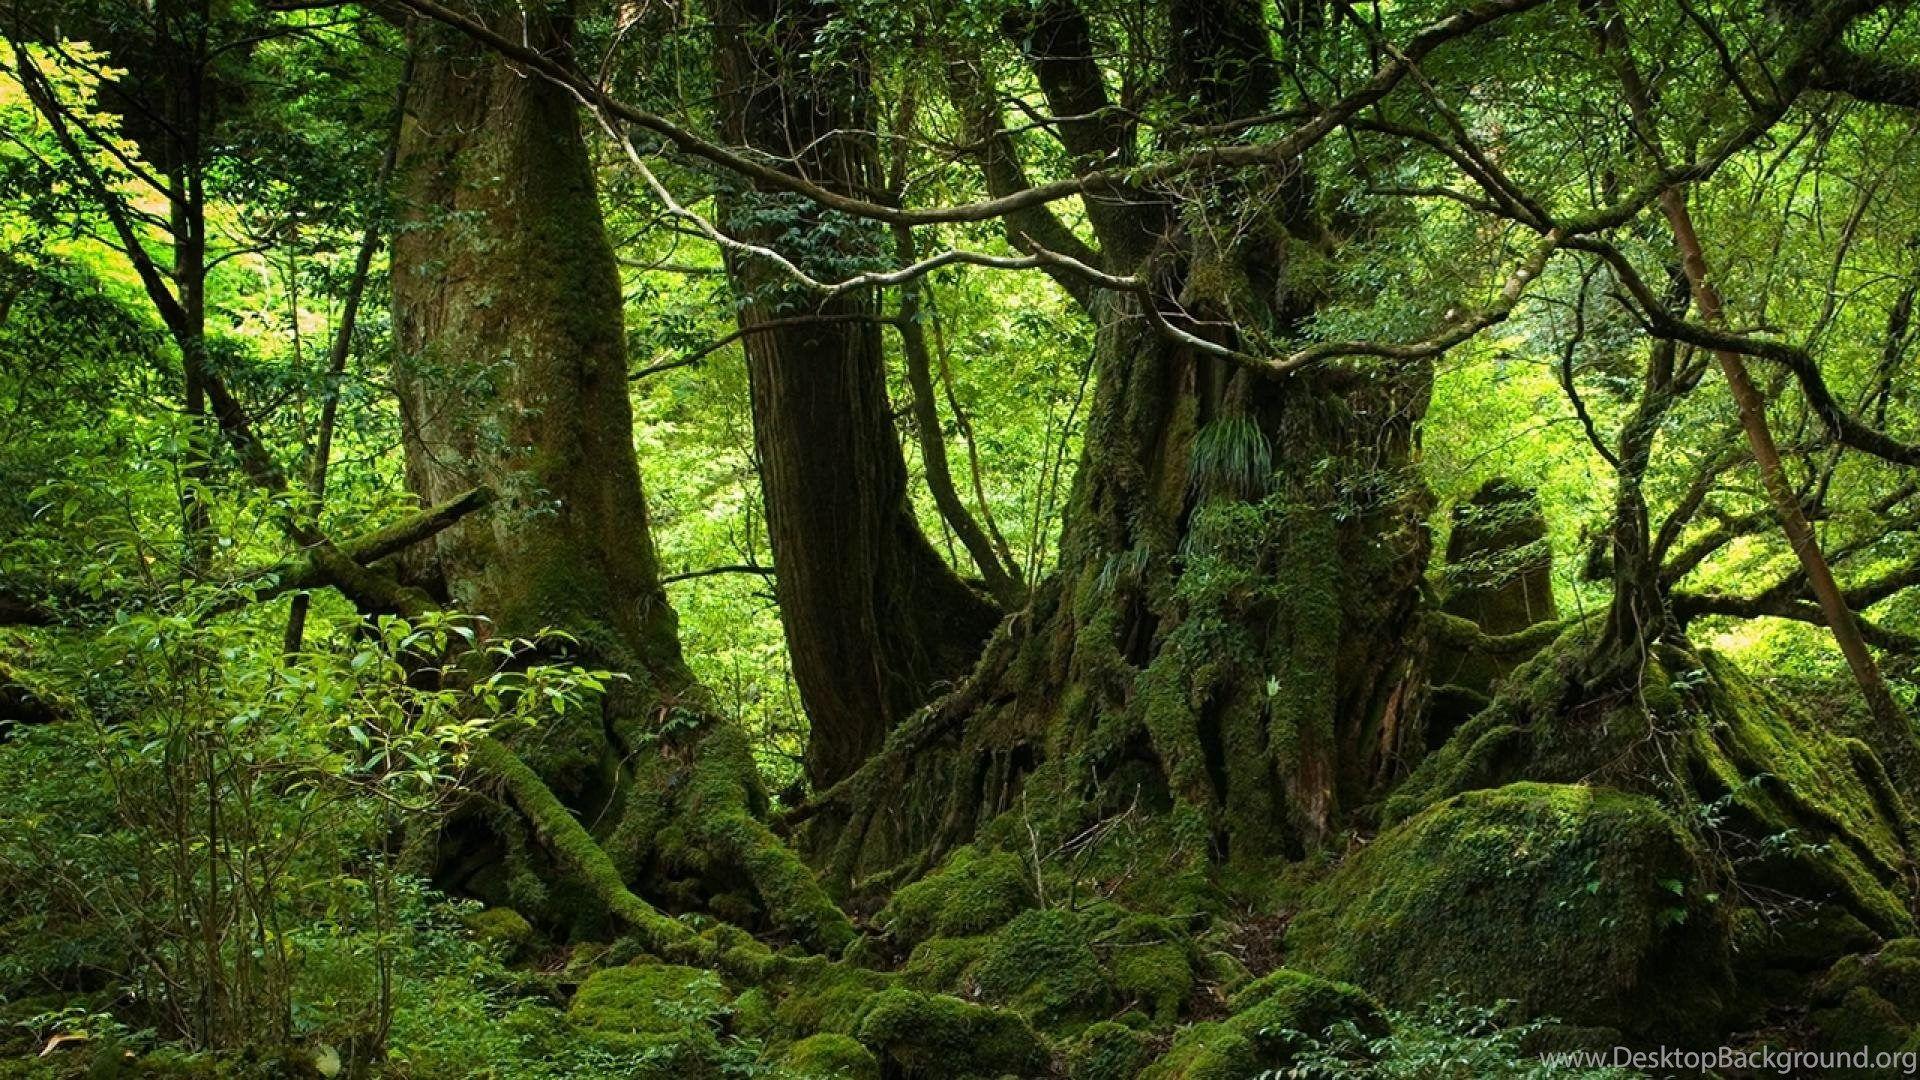 Top Forest Wallpaper HD 1080p Image For Desktop Background